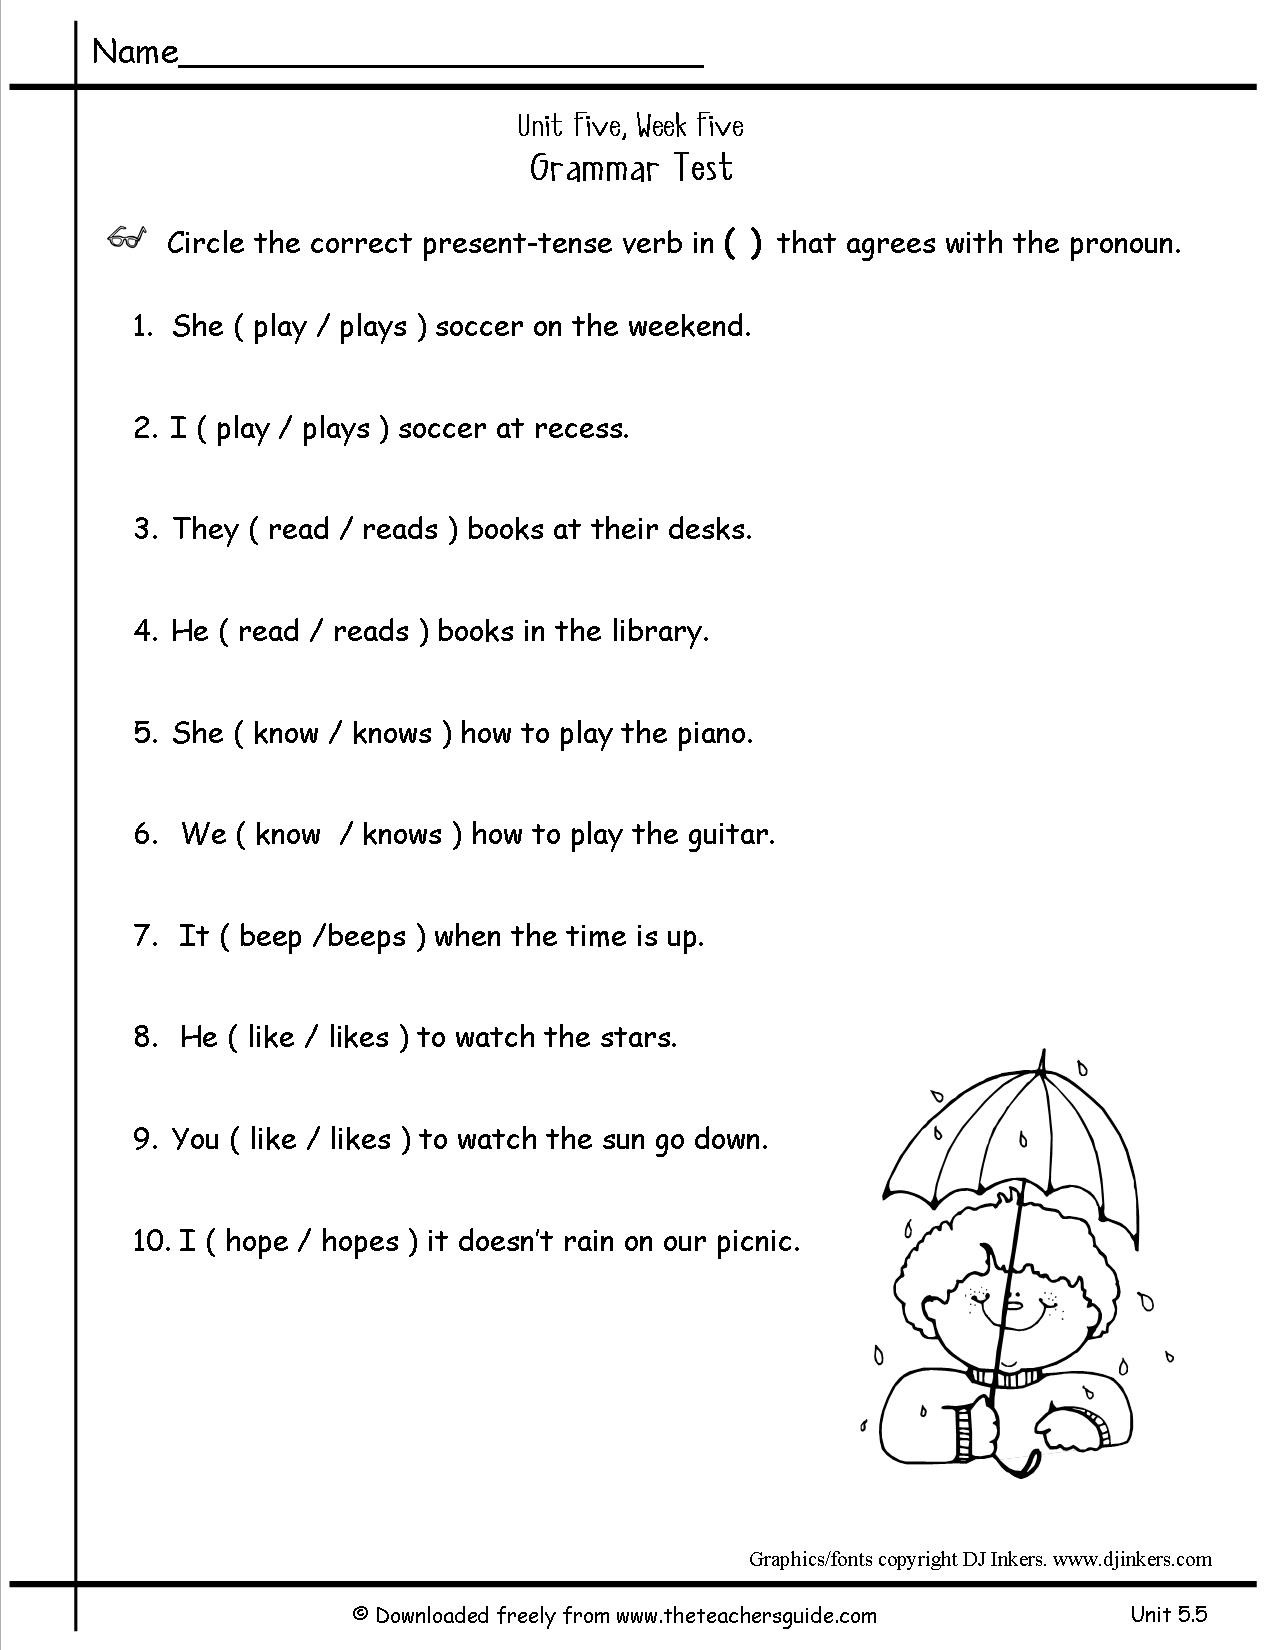 Pronouns Worksheet 2nd Grade Free Pronoun Worksheet for 2nd Grade